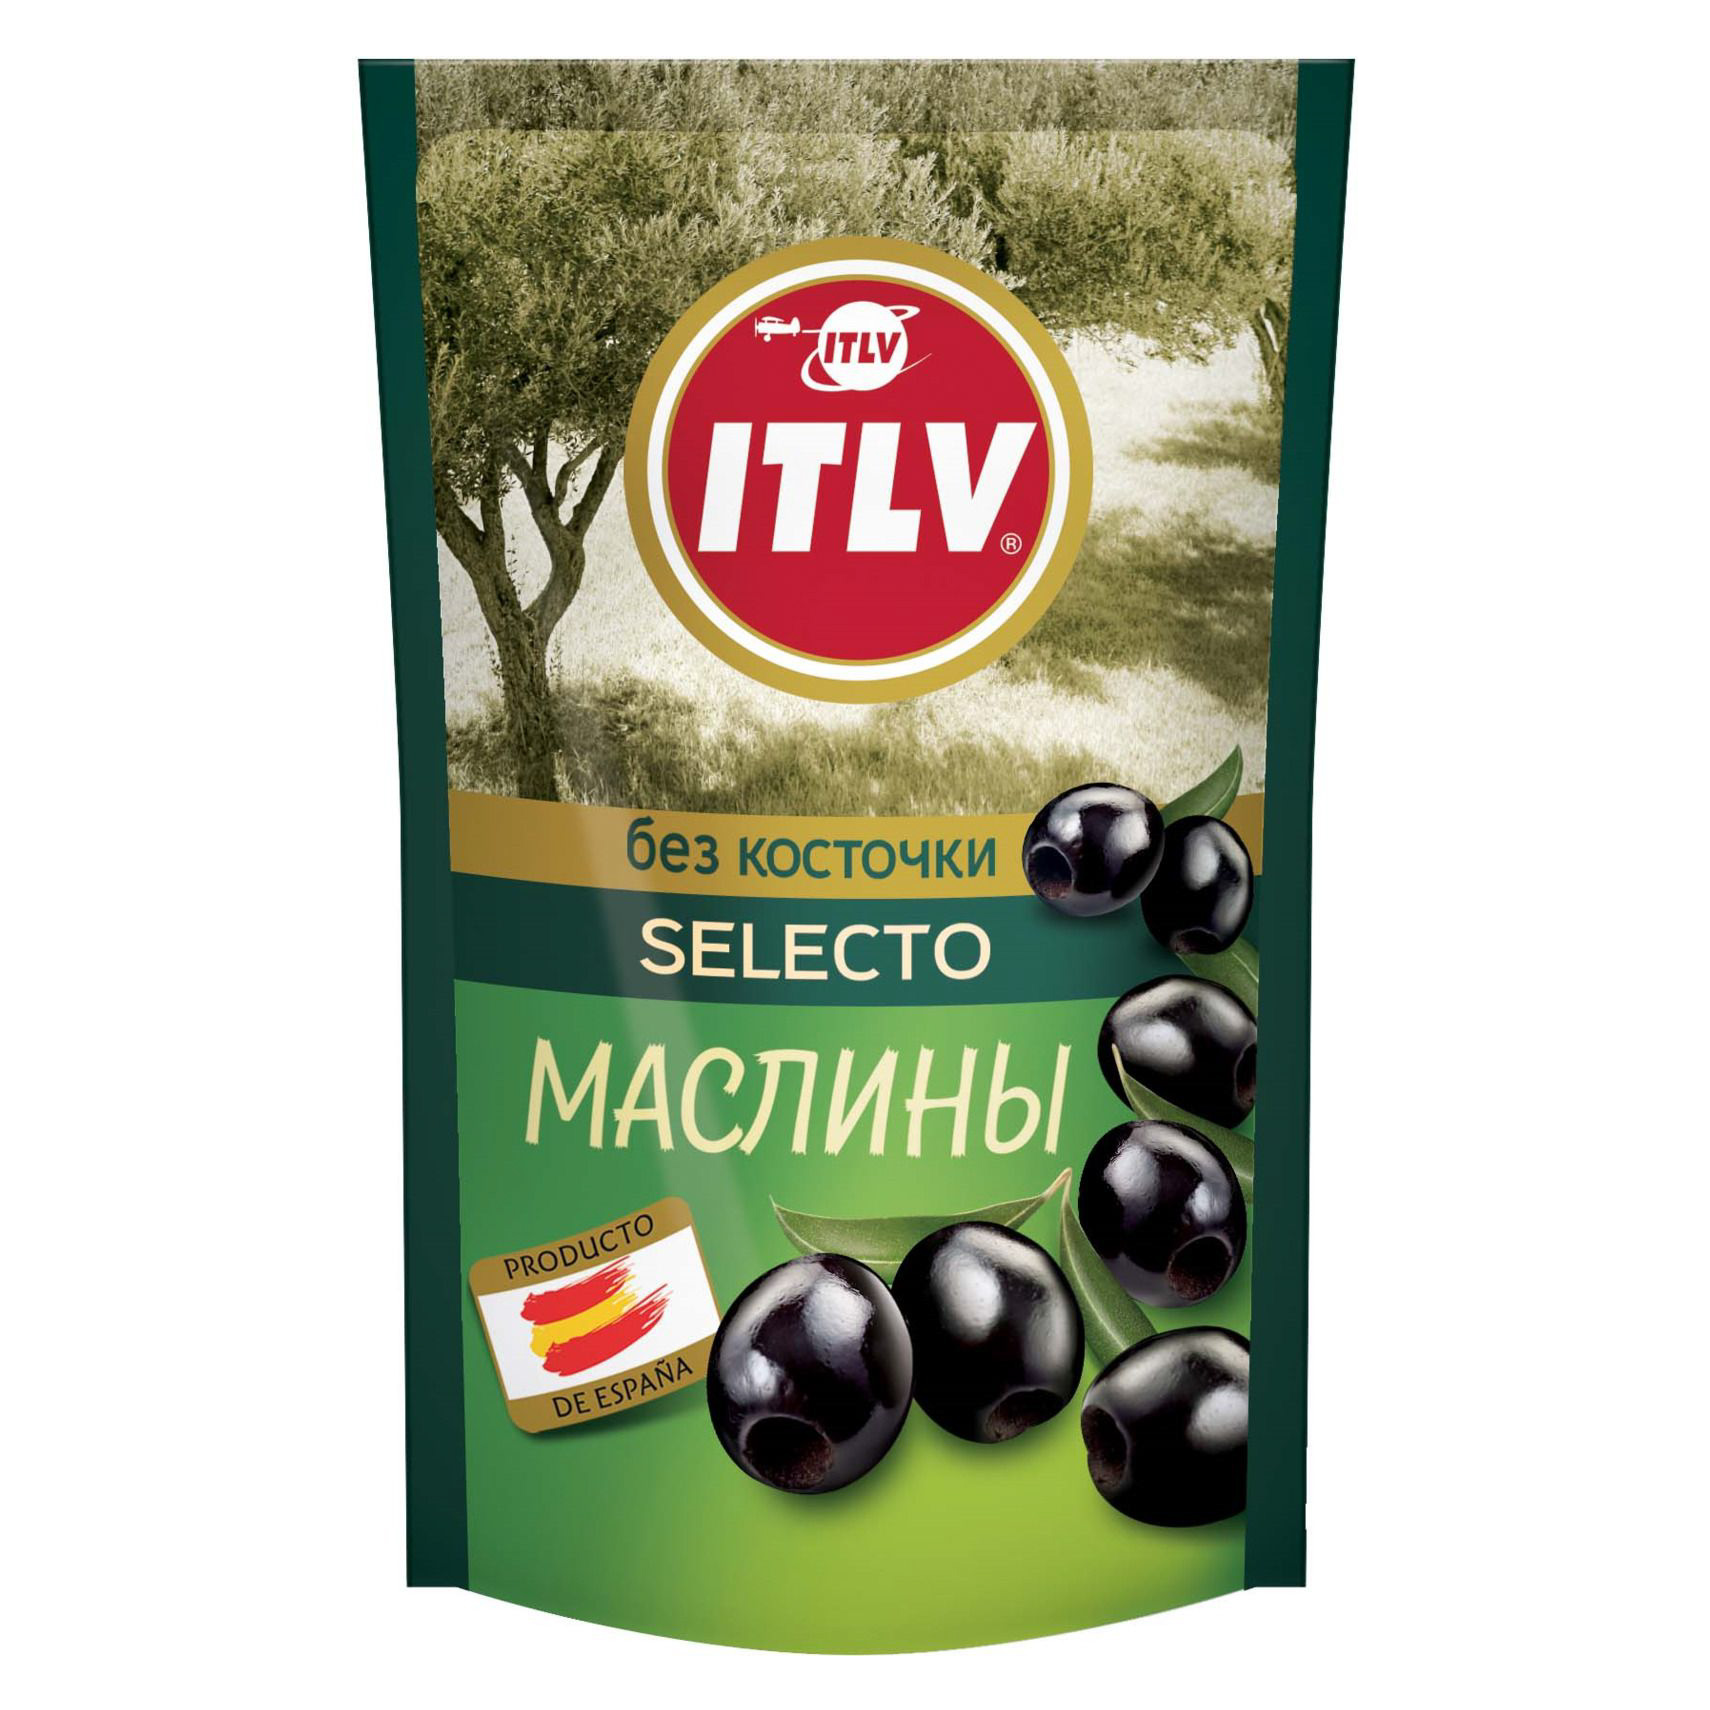 Маслины ITLV без косточки, 170 г маслины iberica мини без косточки ж б 300гр